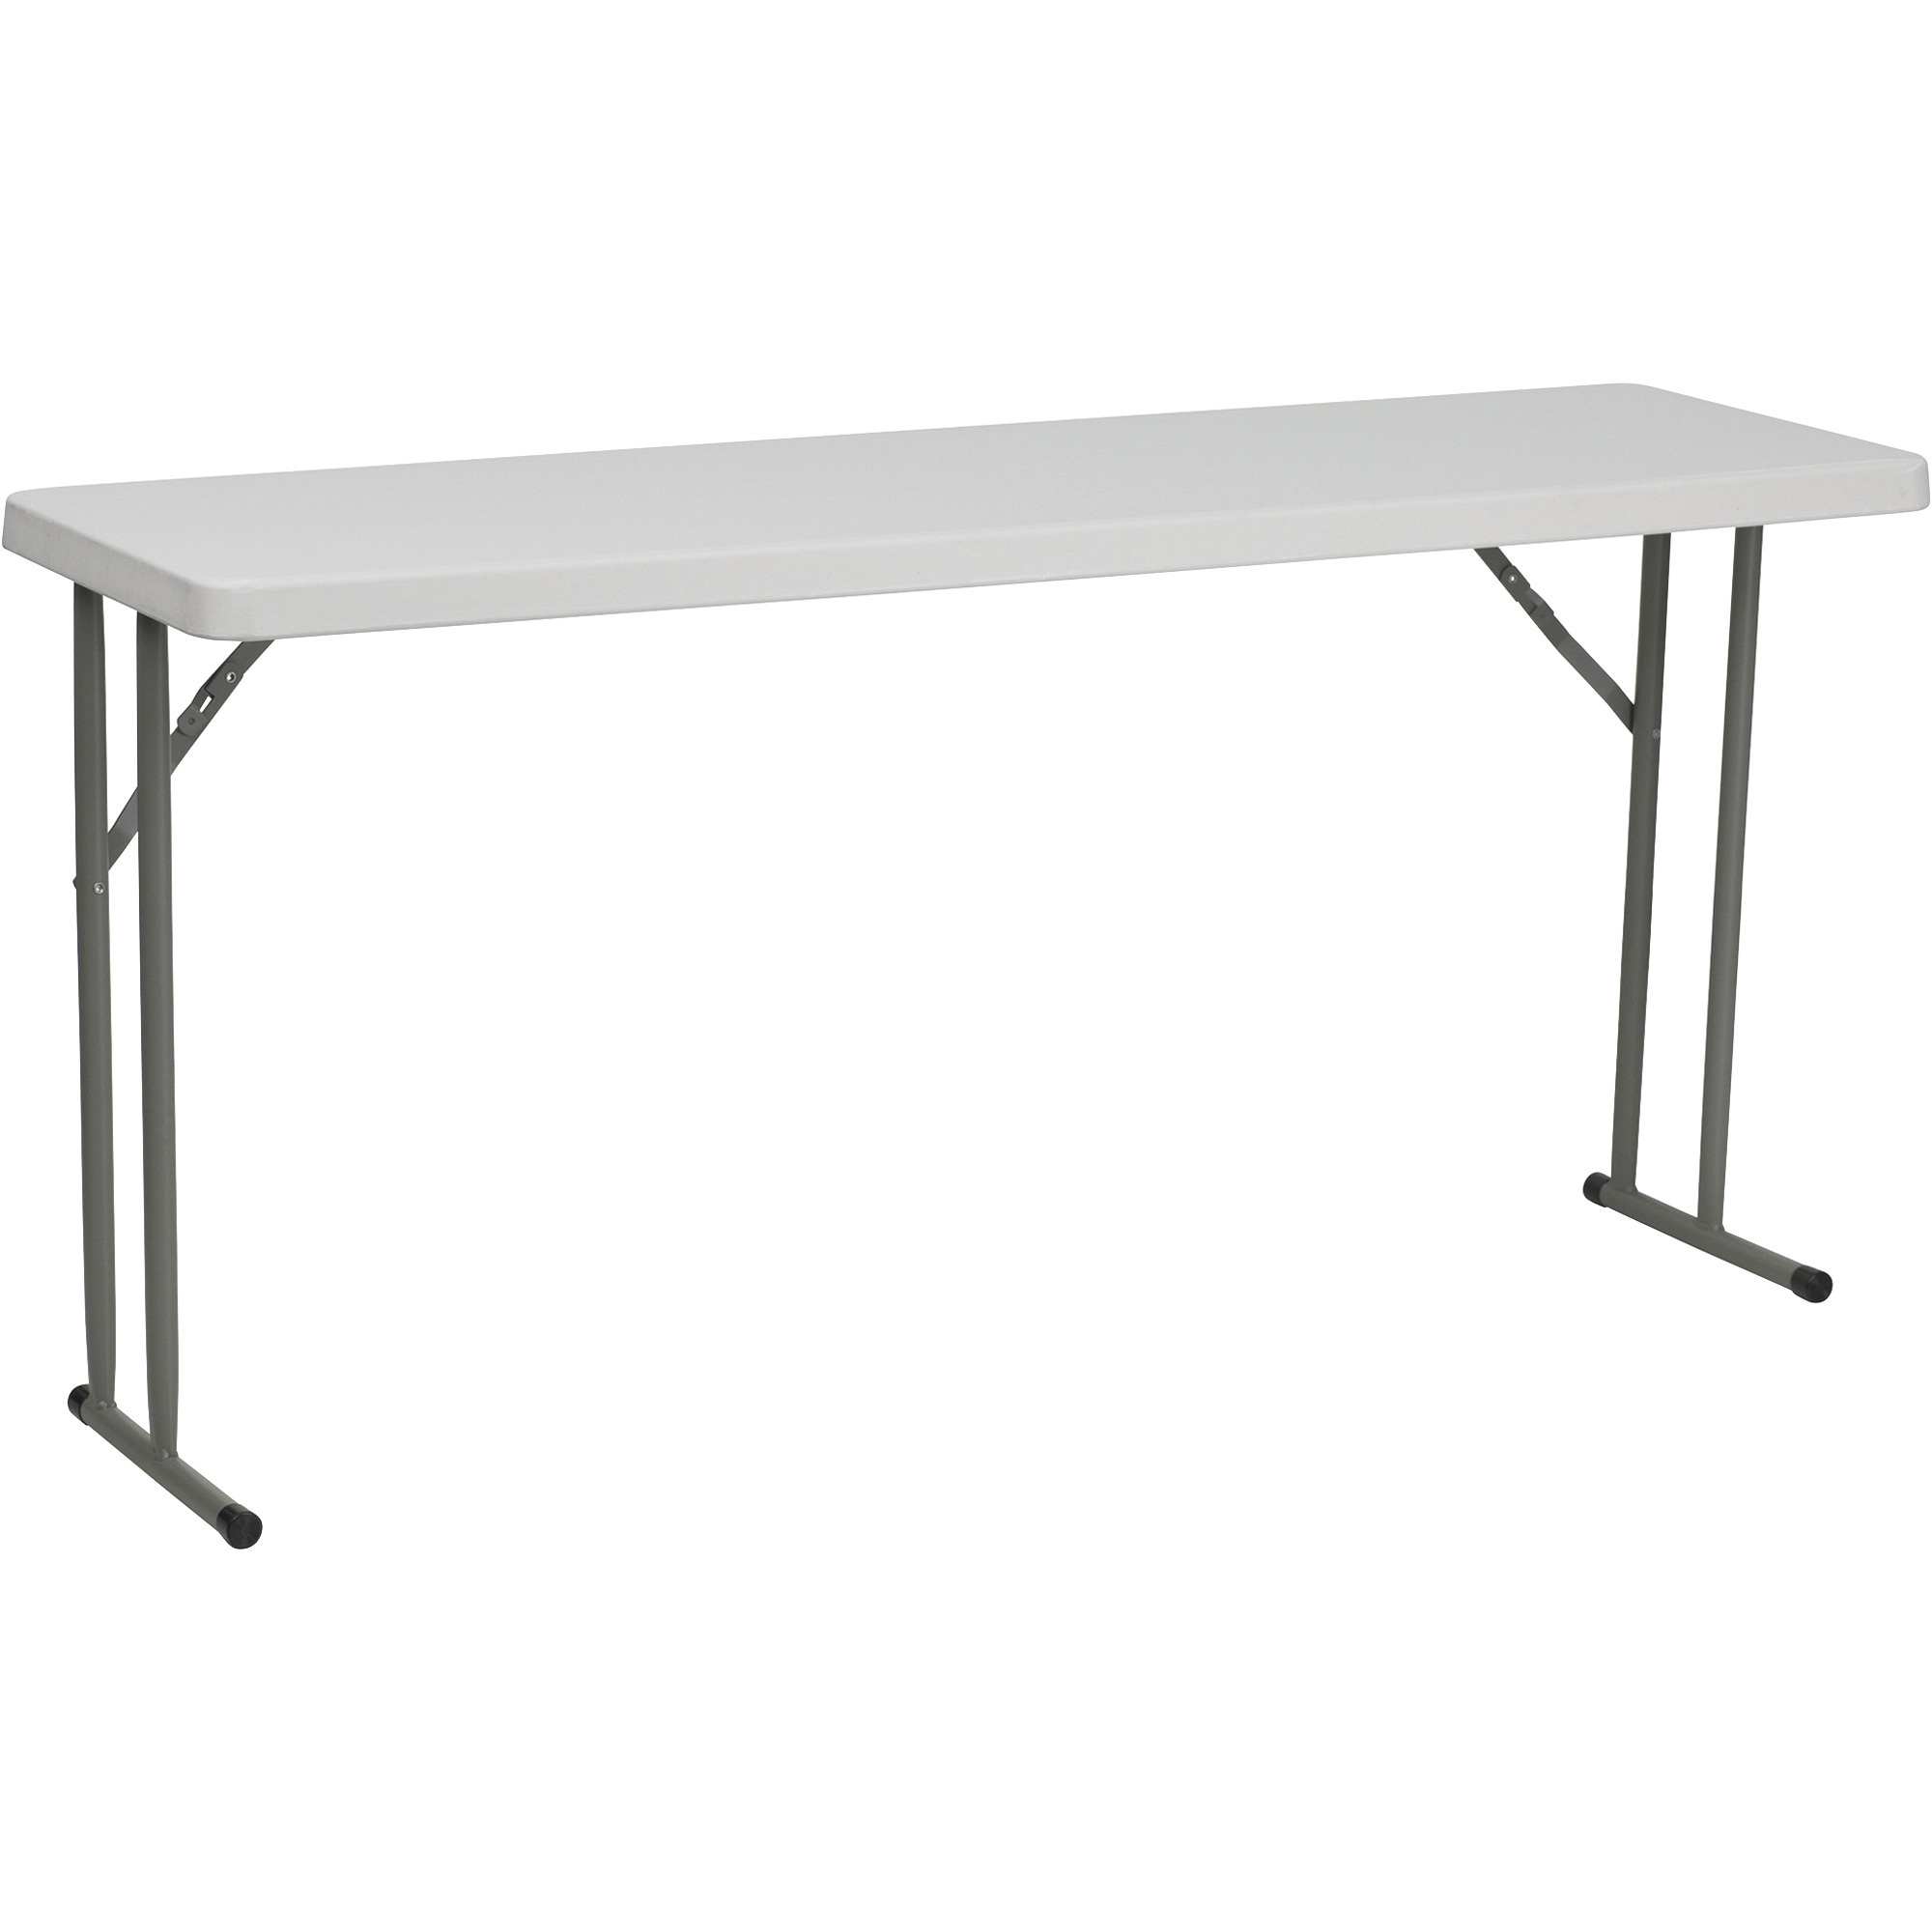 Rectangular Plastic Folding Table — 60Inch L x 18Inch W x 29Inch H, Model - Flash Furniture RB1860